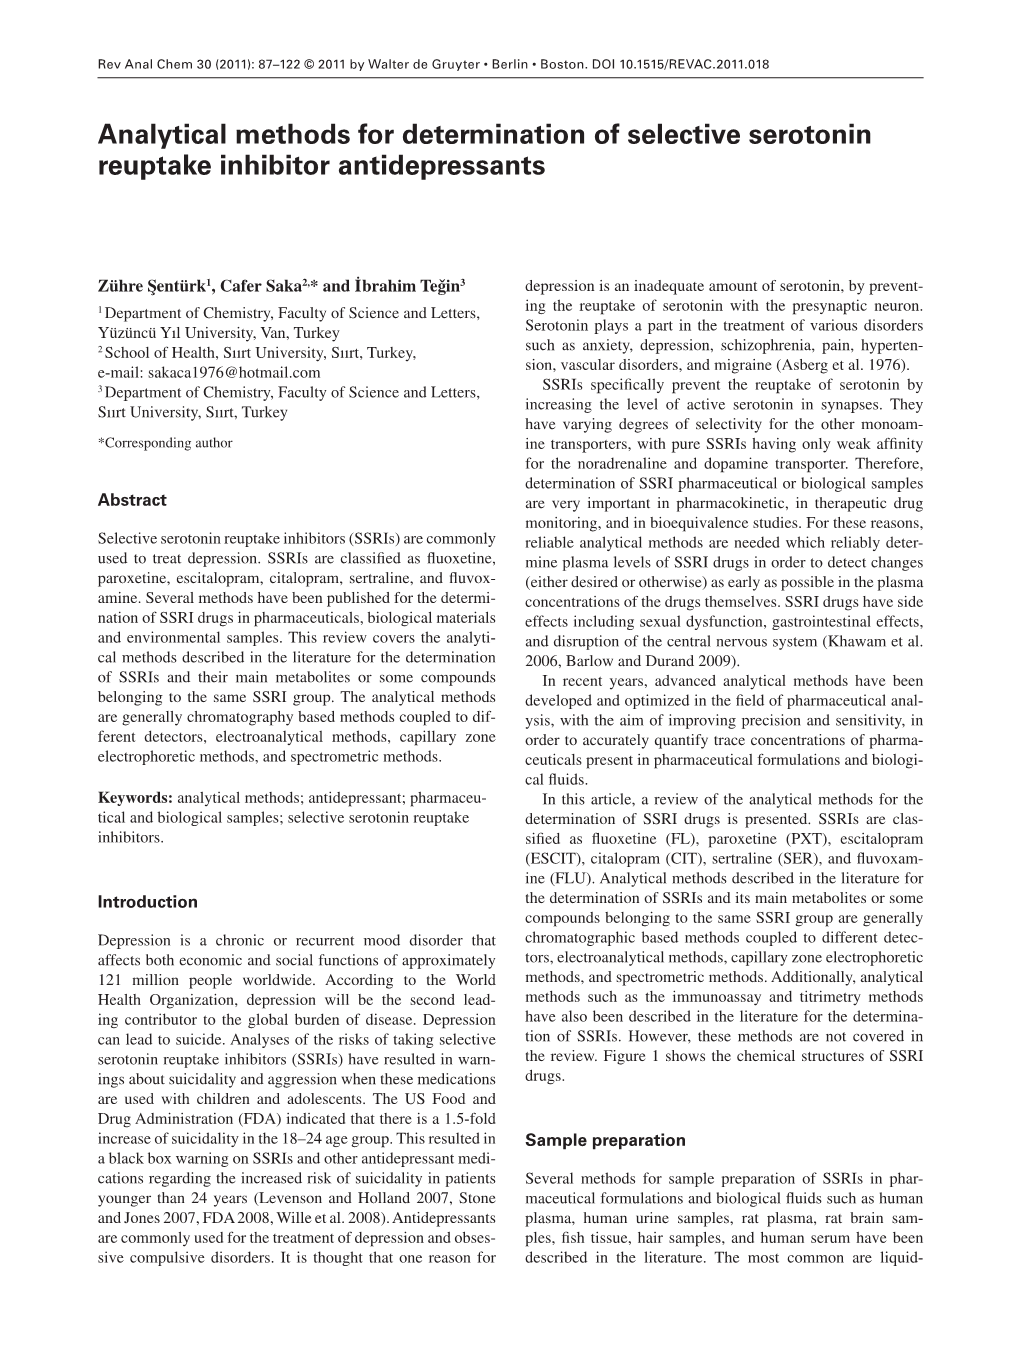 Analytical Methods for Determination of Selective Serotonin Reuptake Inhibitor Antidepressants